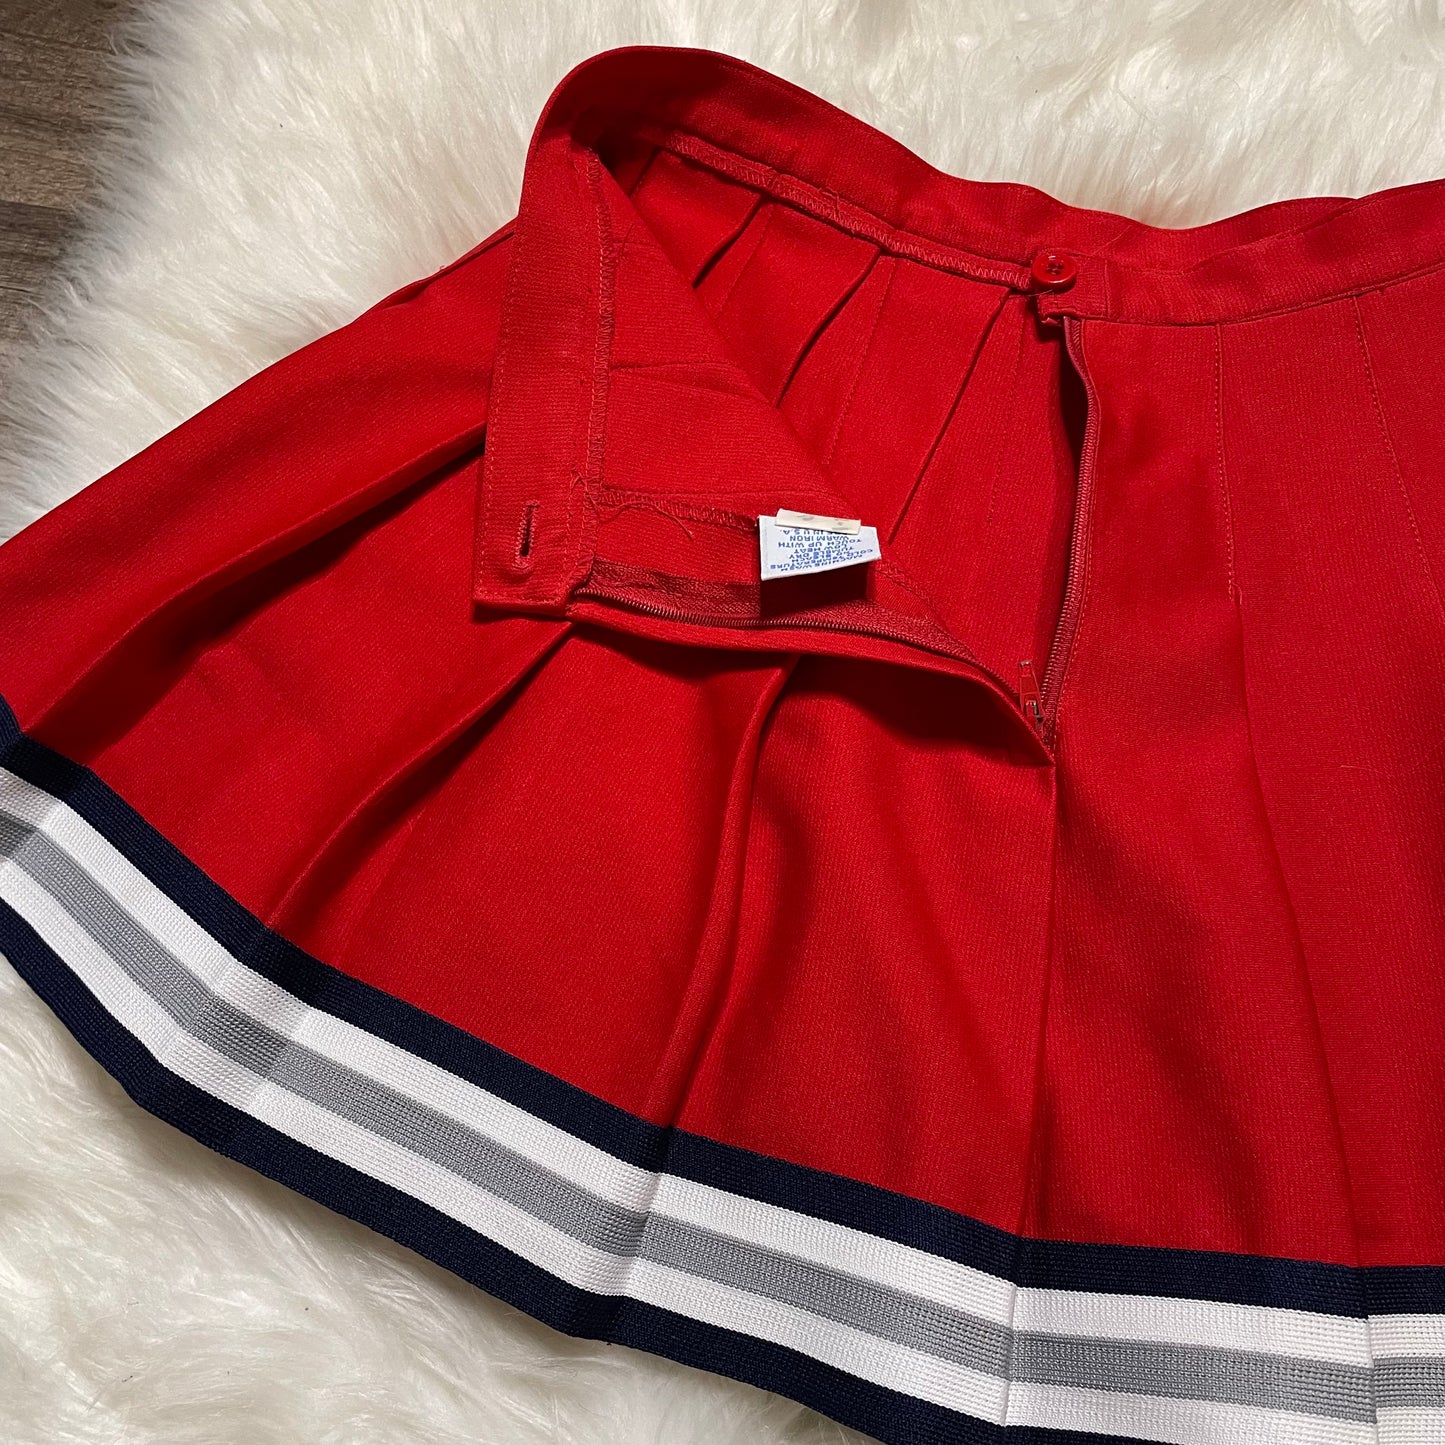 Vintage Tennis Skirt